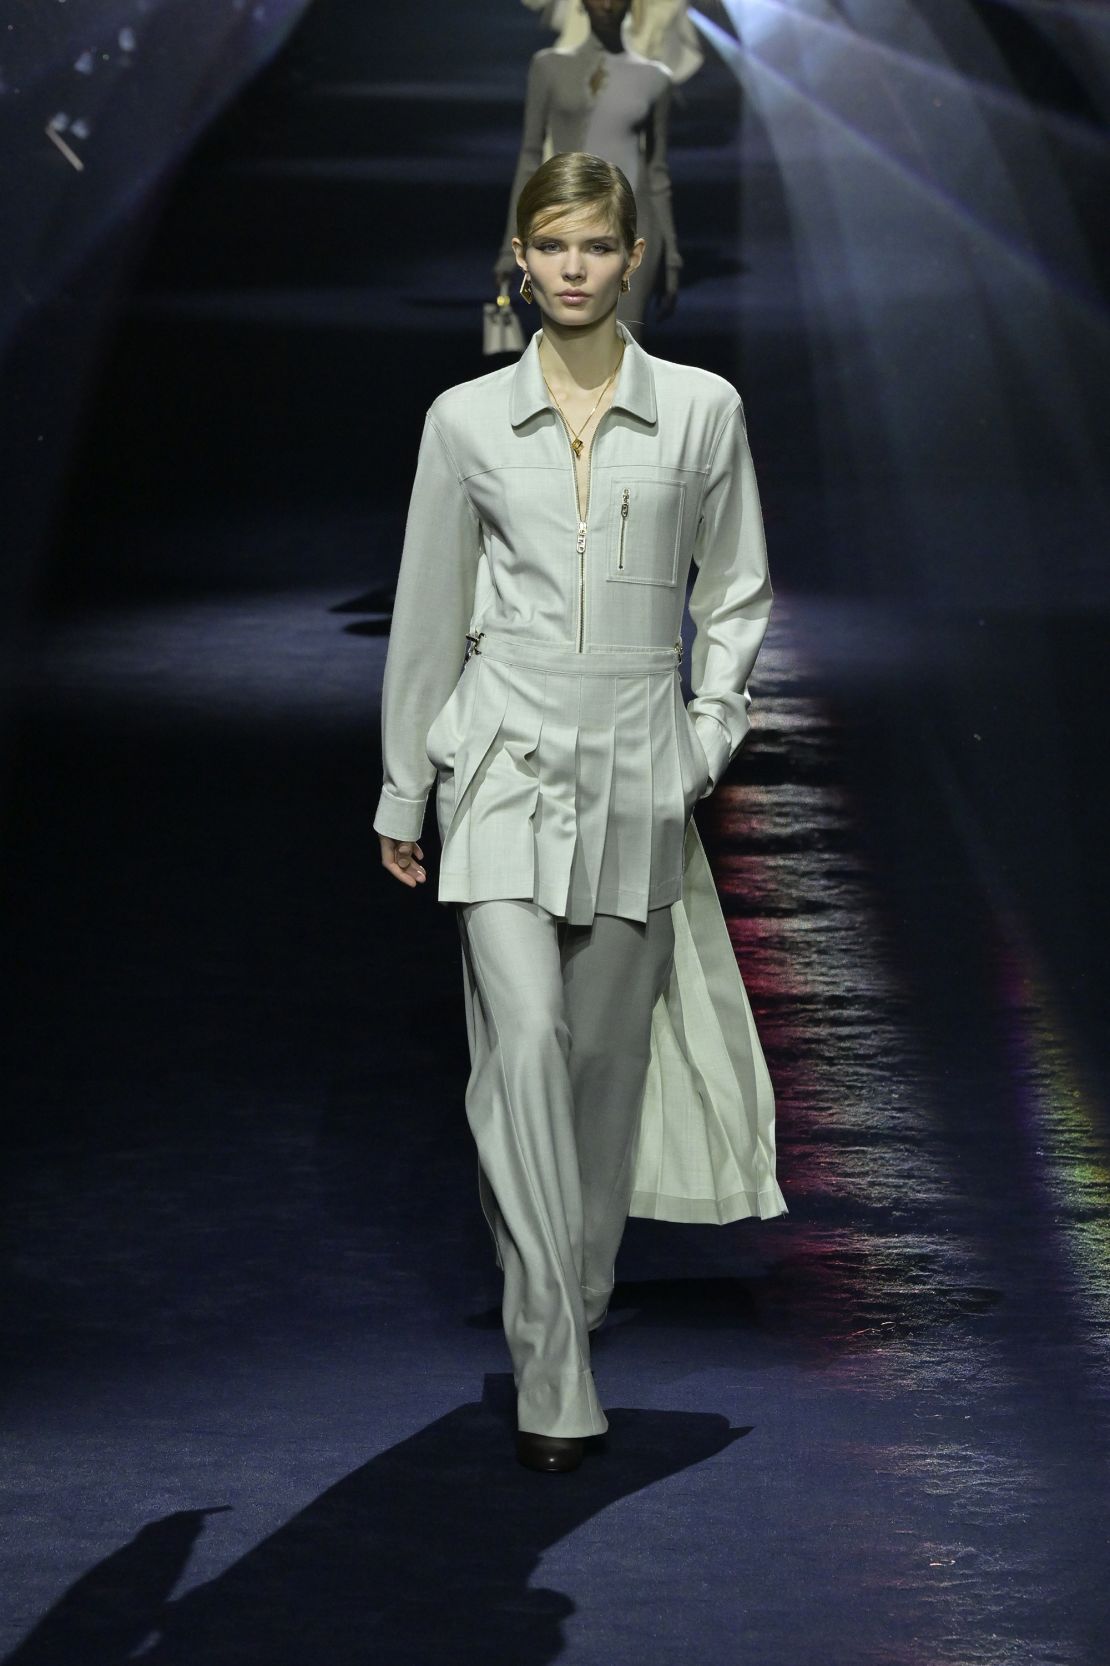 At Milan Fashion Week, Models Had Clothes Falling Apart On The